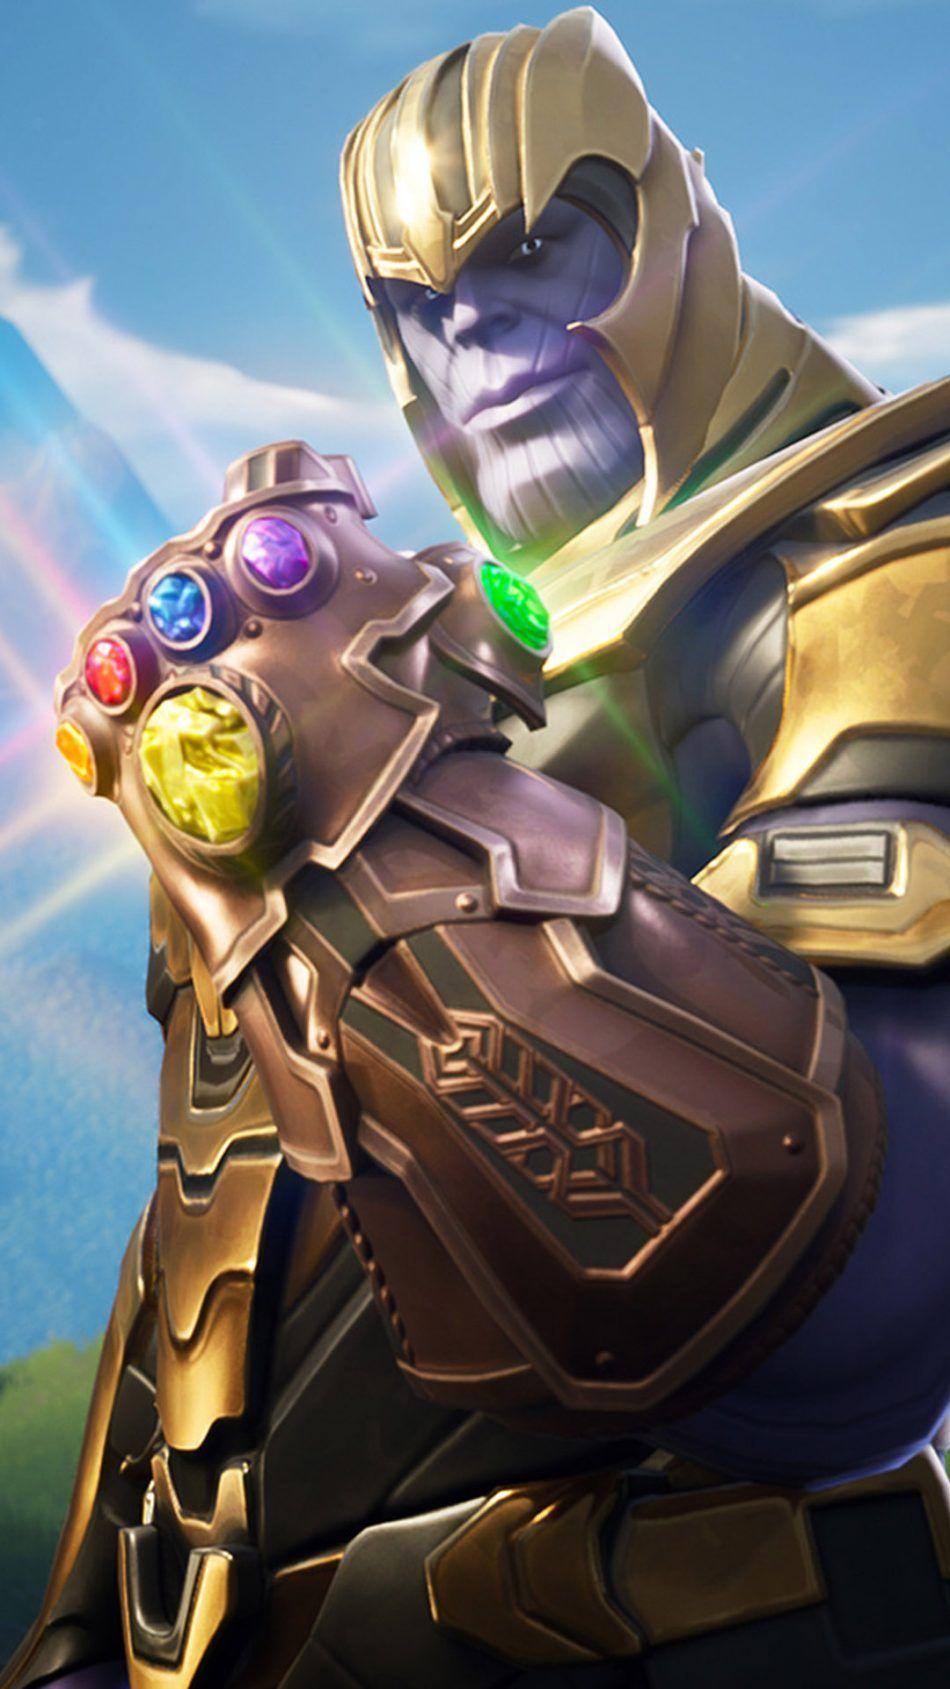 Thanos In Fortnite Battle Royale 4K Ultra HD Mobile Wallpaper. Marvel wallpaper, Thanos marvel, Marvel